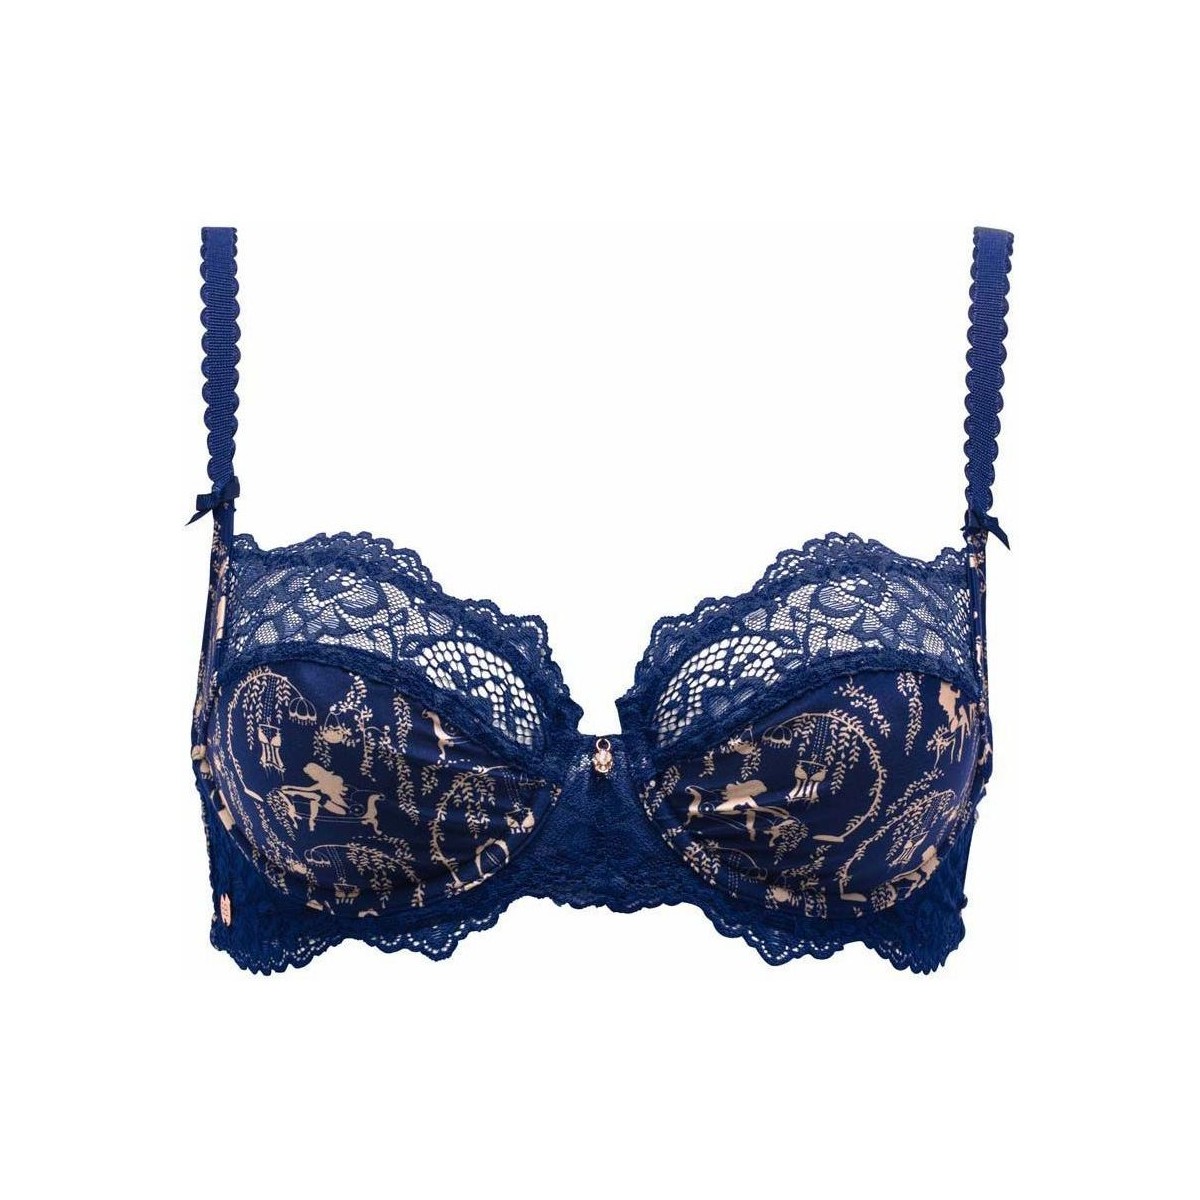 Brigitte Bardot Bleu Soutien-gorge corbeille bleu marine Haute Couture 1pWwYNJ8